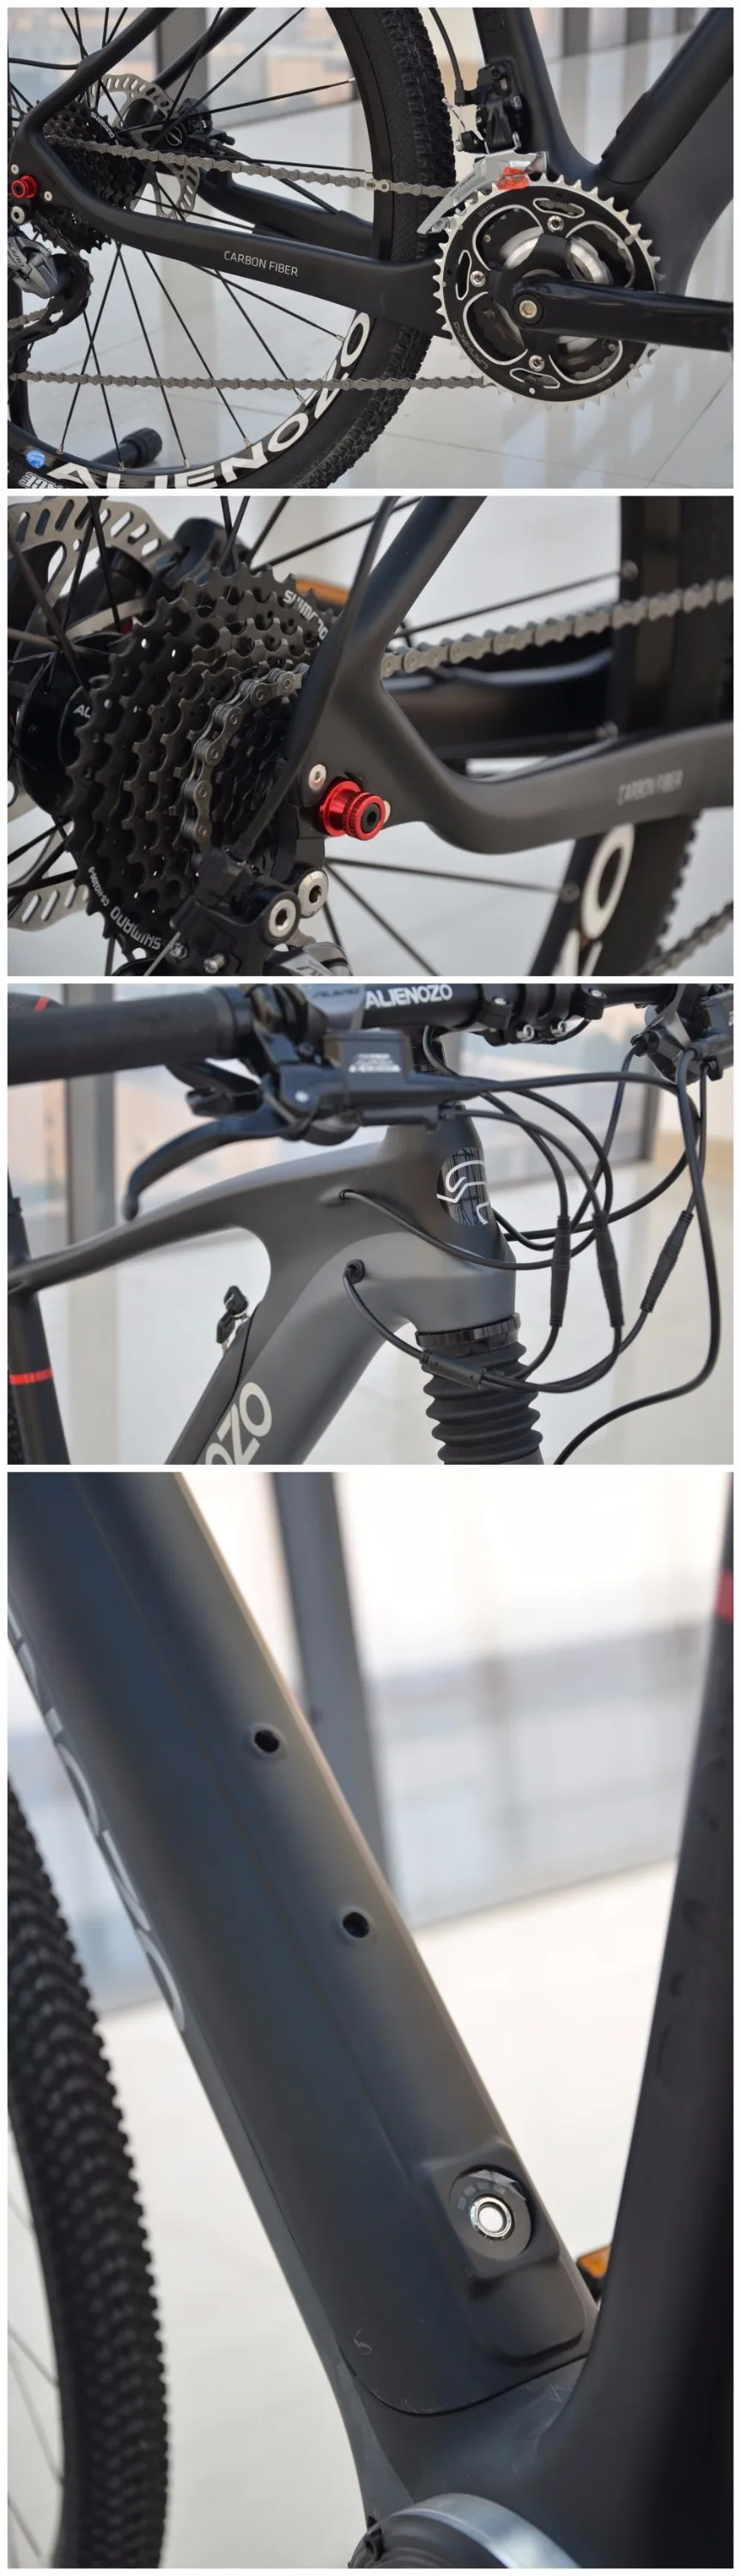 Alienozo 48v 500w electric mountain bike, mid drive motor kit of bicicleta electrica, electric bike mid motor 1000w